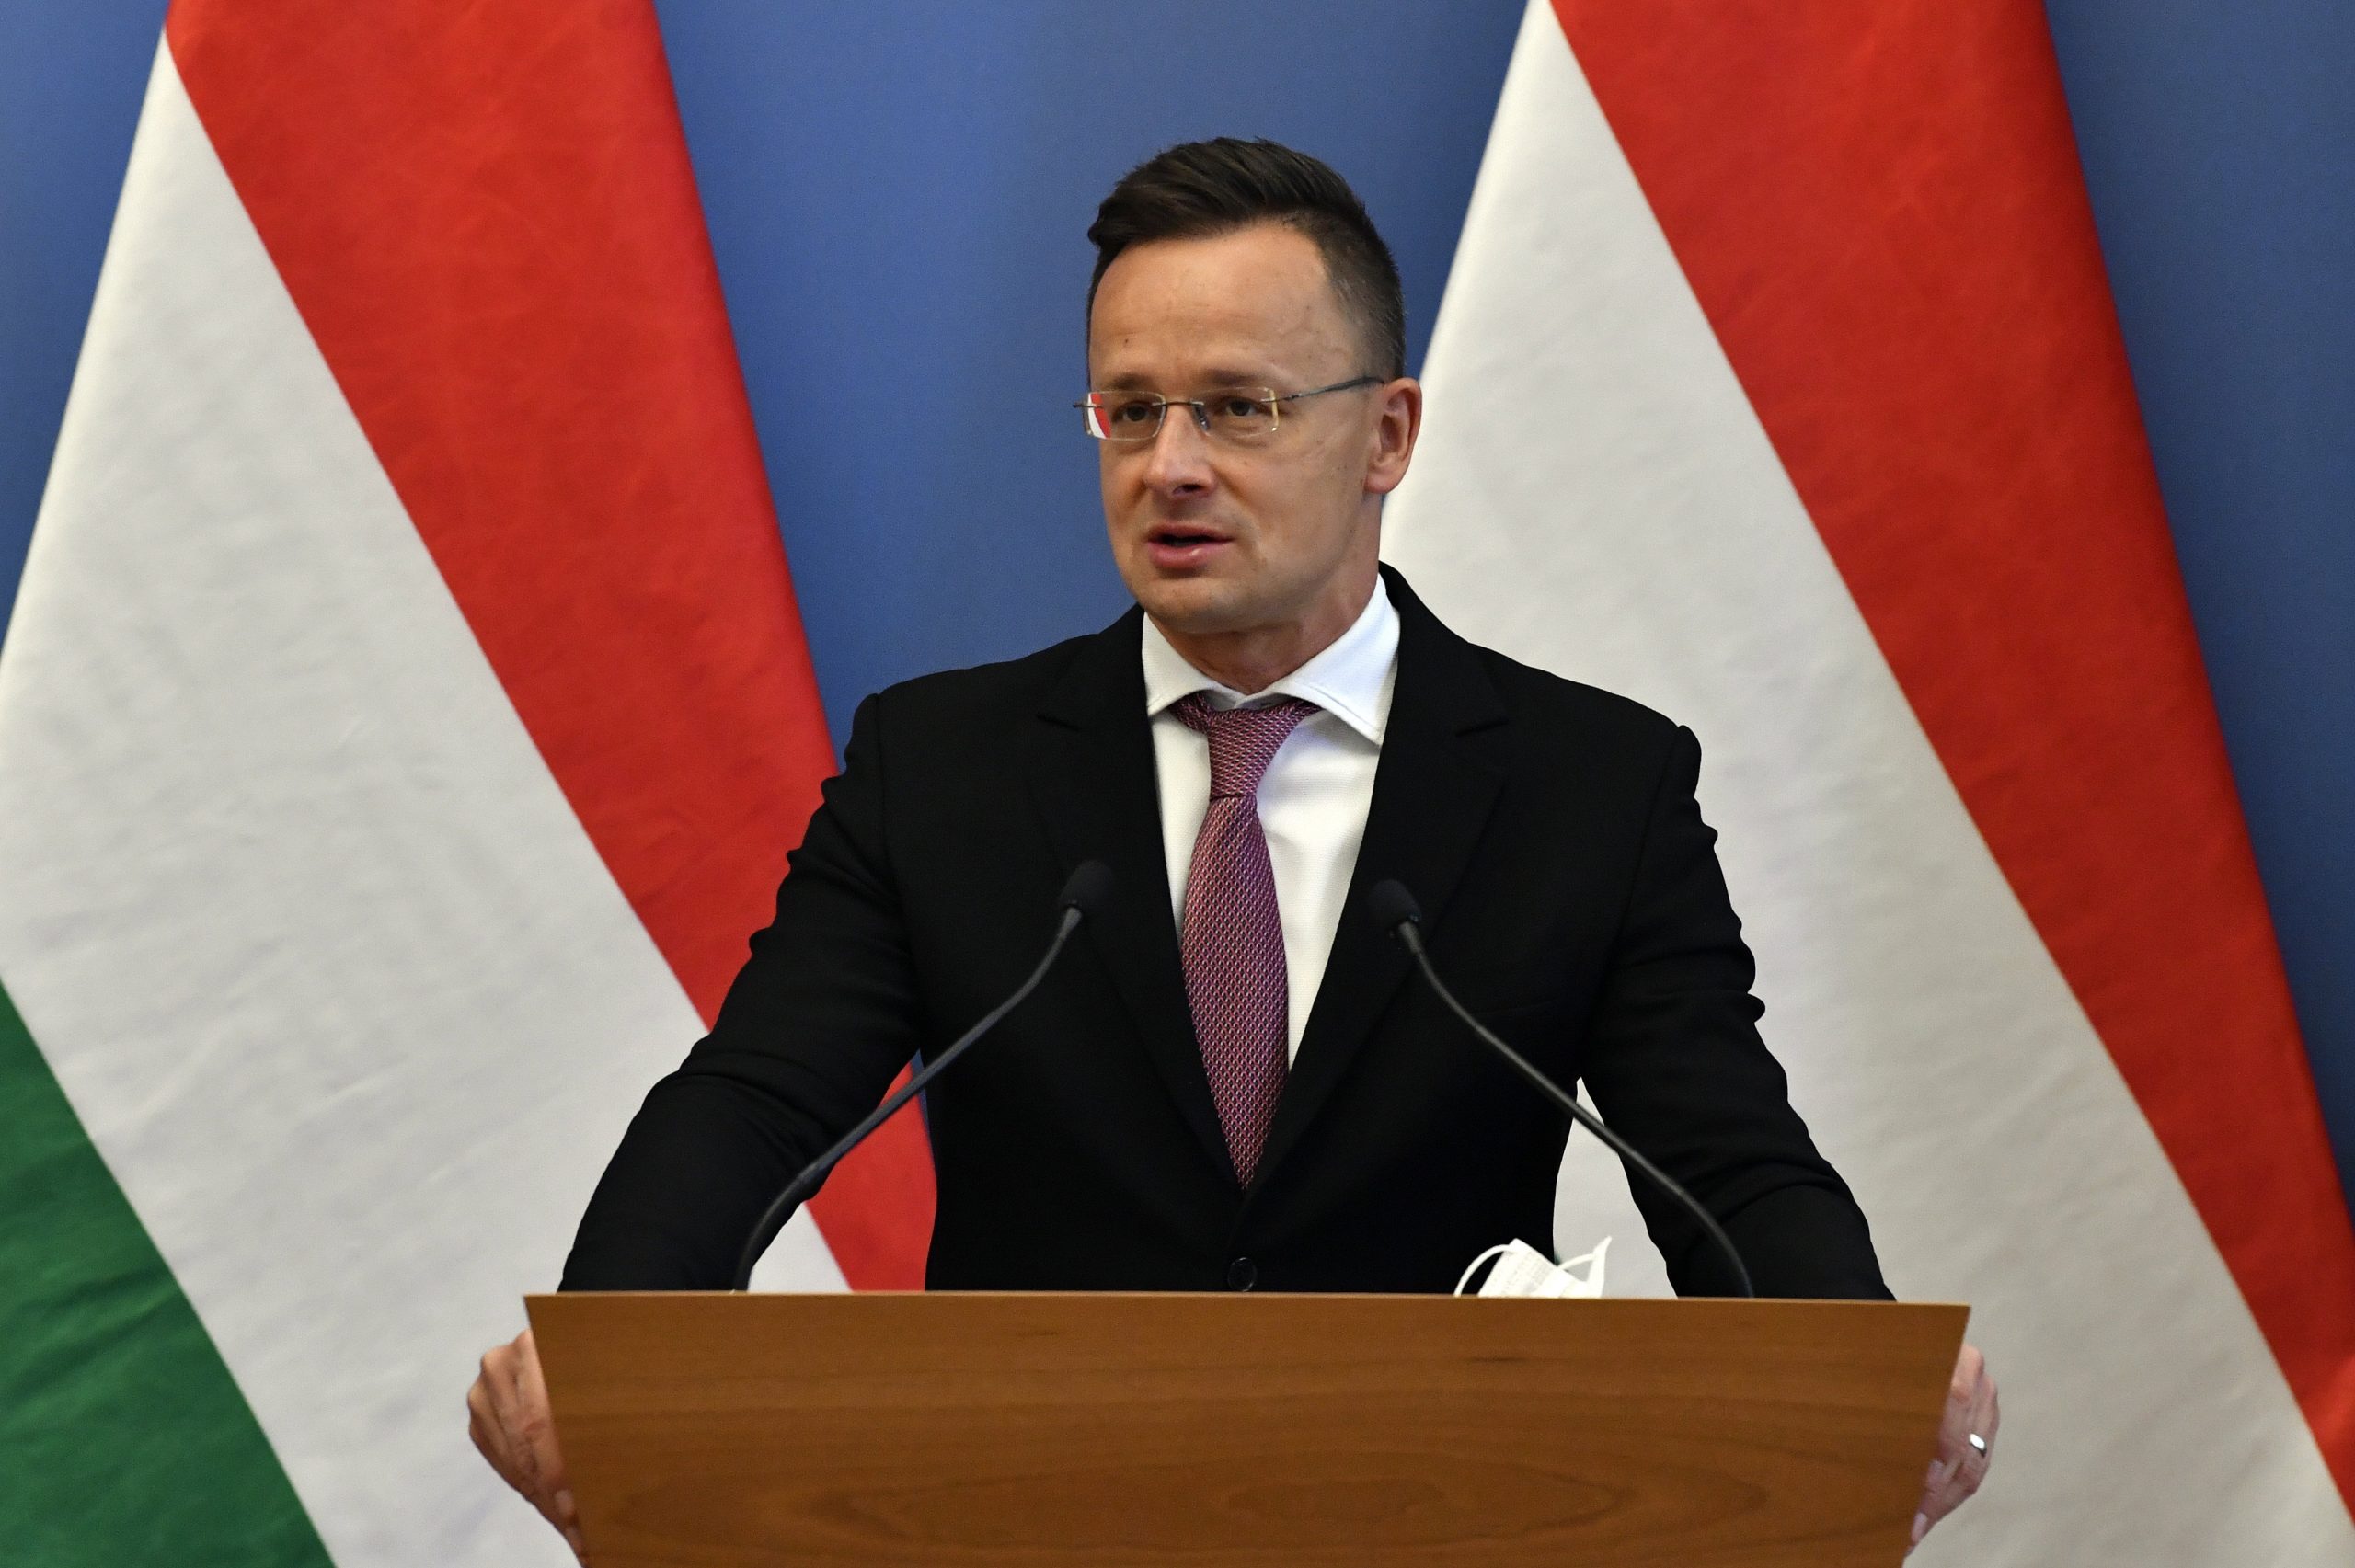 FM Szijjártó: Hungary Wants Ukrainian Relations of Mutual Respect